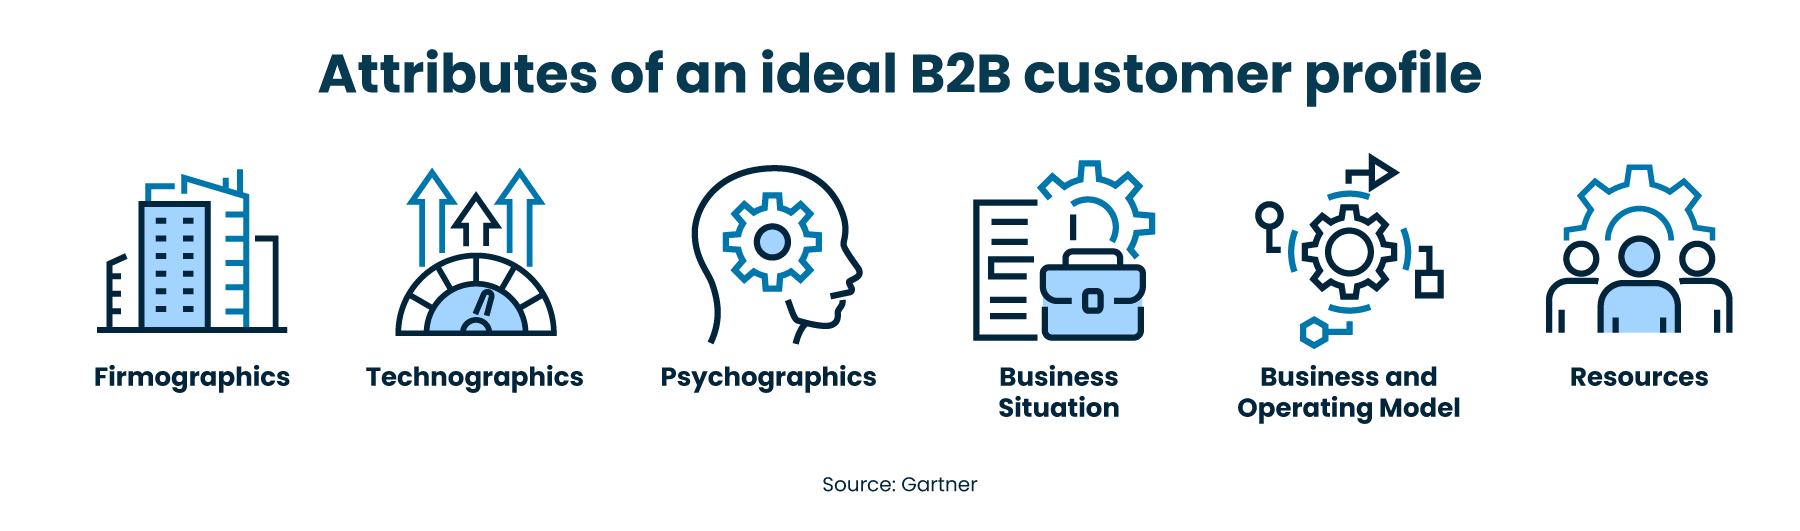 Attributes of an ideal B2B customer profile